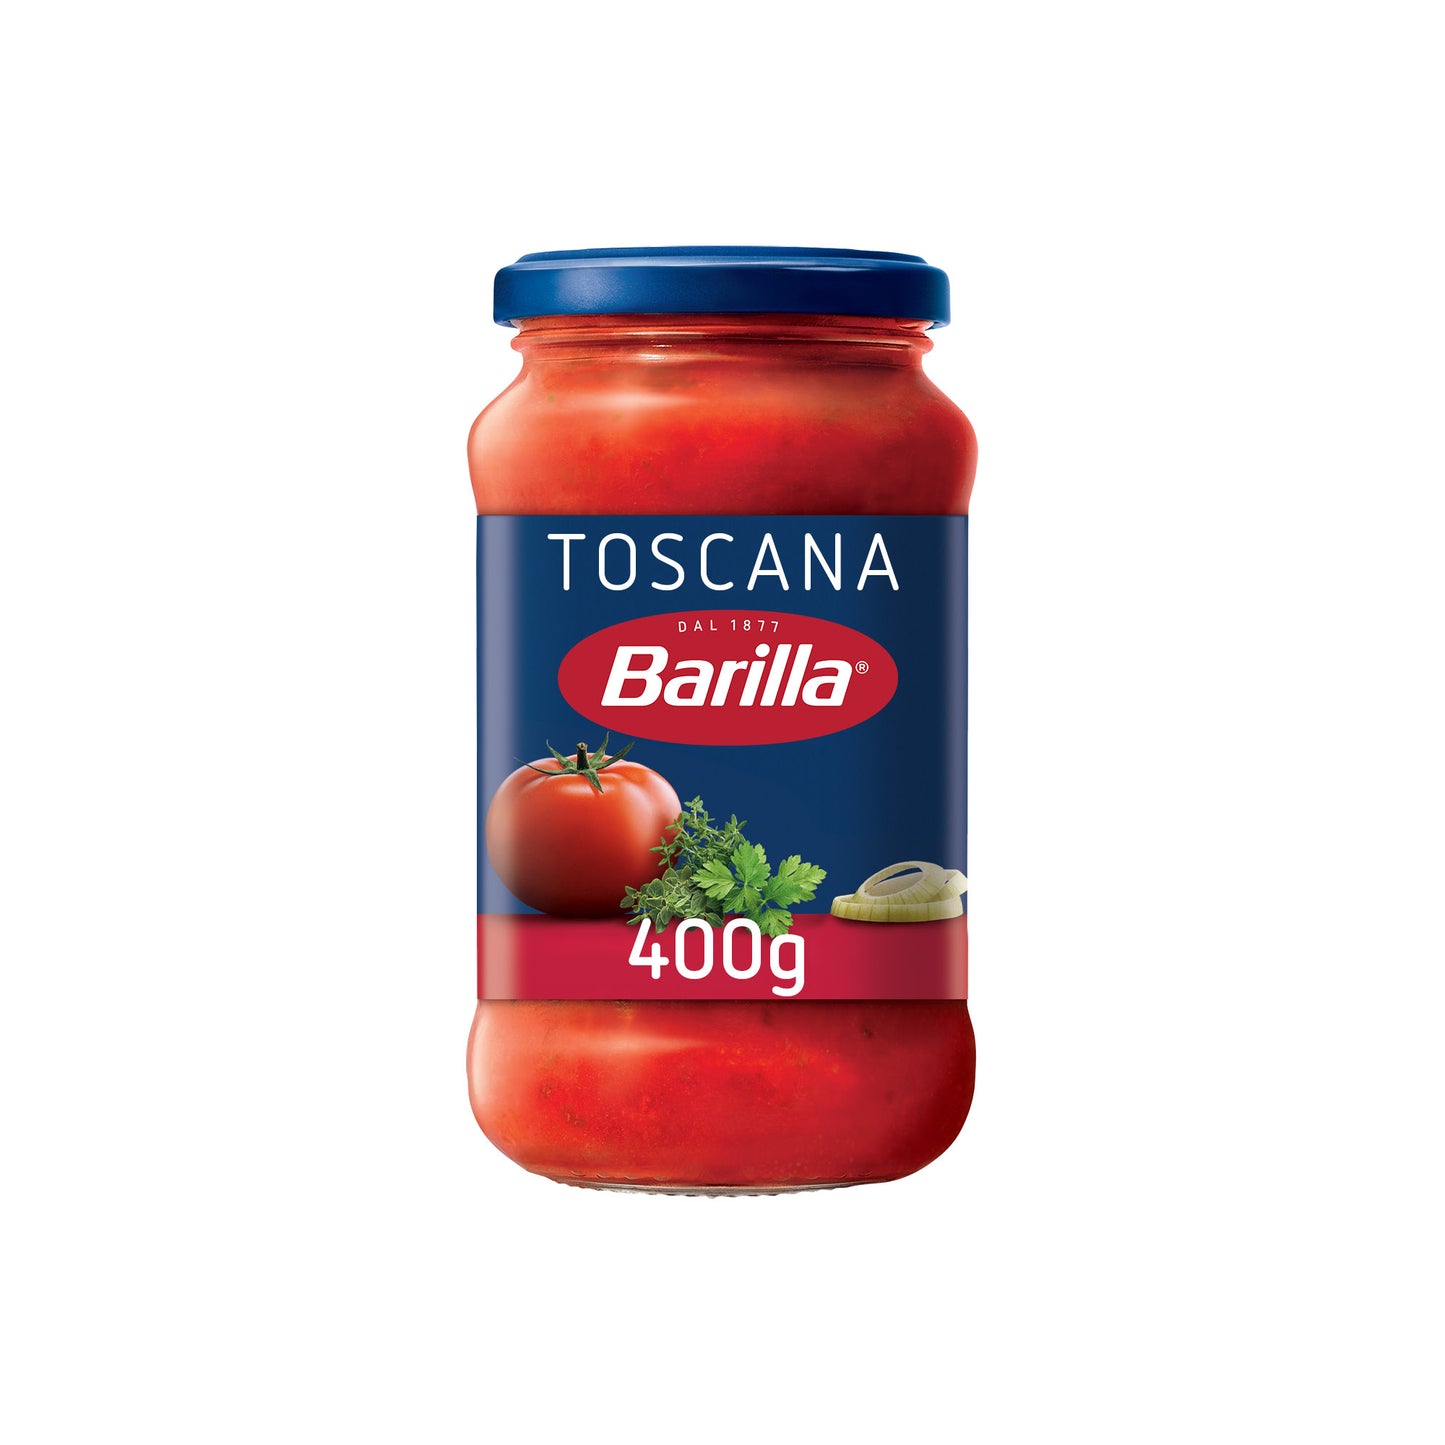 Barilla Toscana Pasta Sauce with Italian Tomato and Herbs 400g